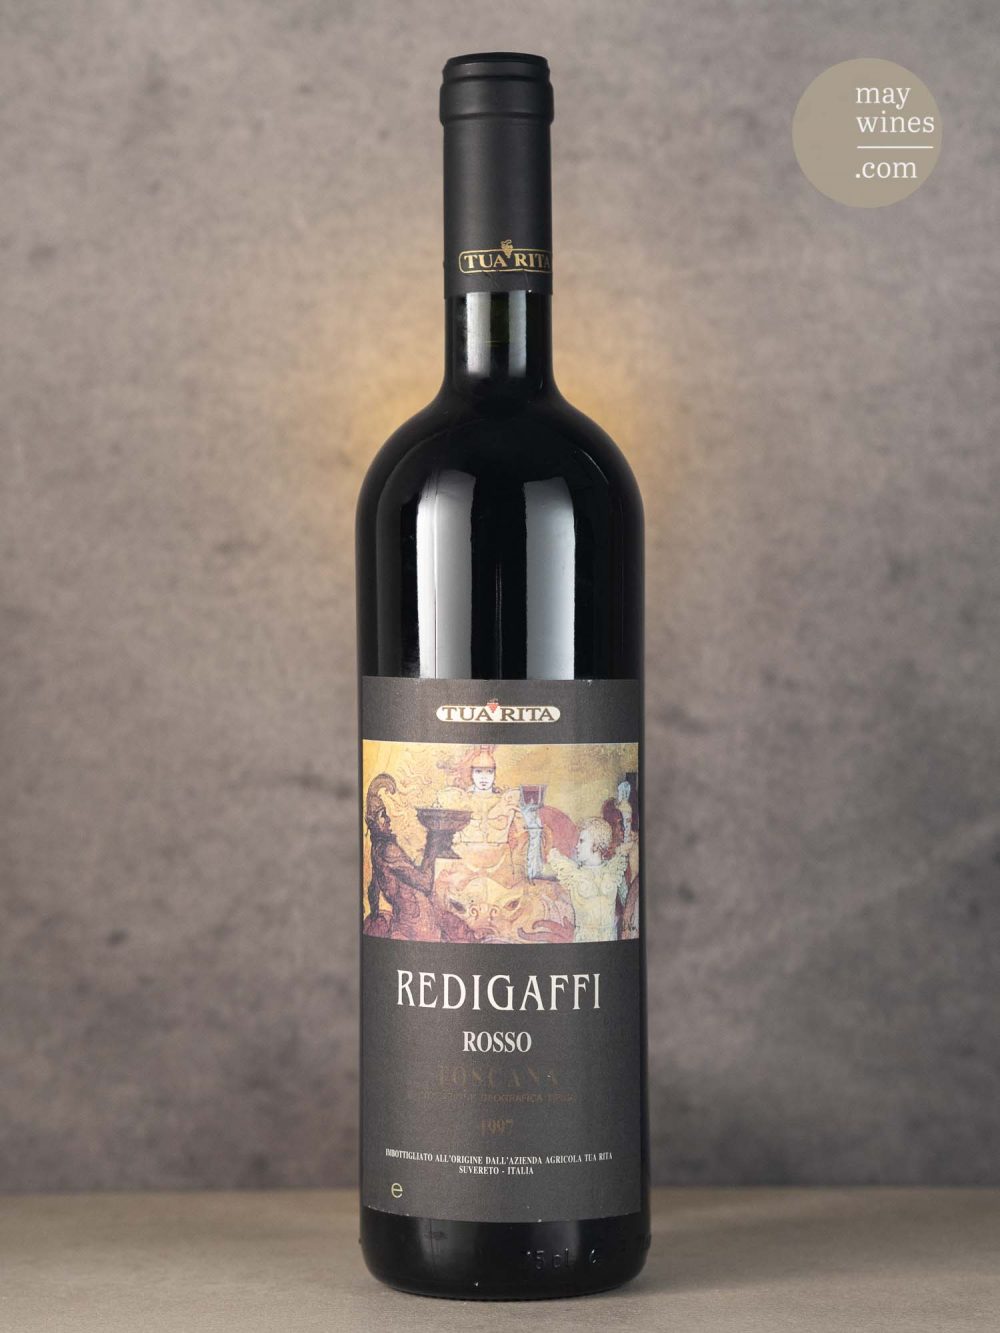 May Wines – Rotwein – 1997 Redigaffi Rosso - Tua Rita